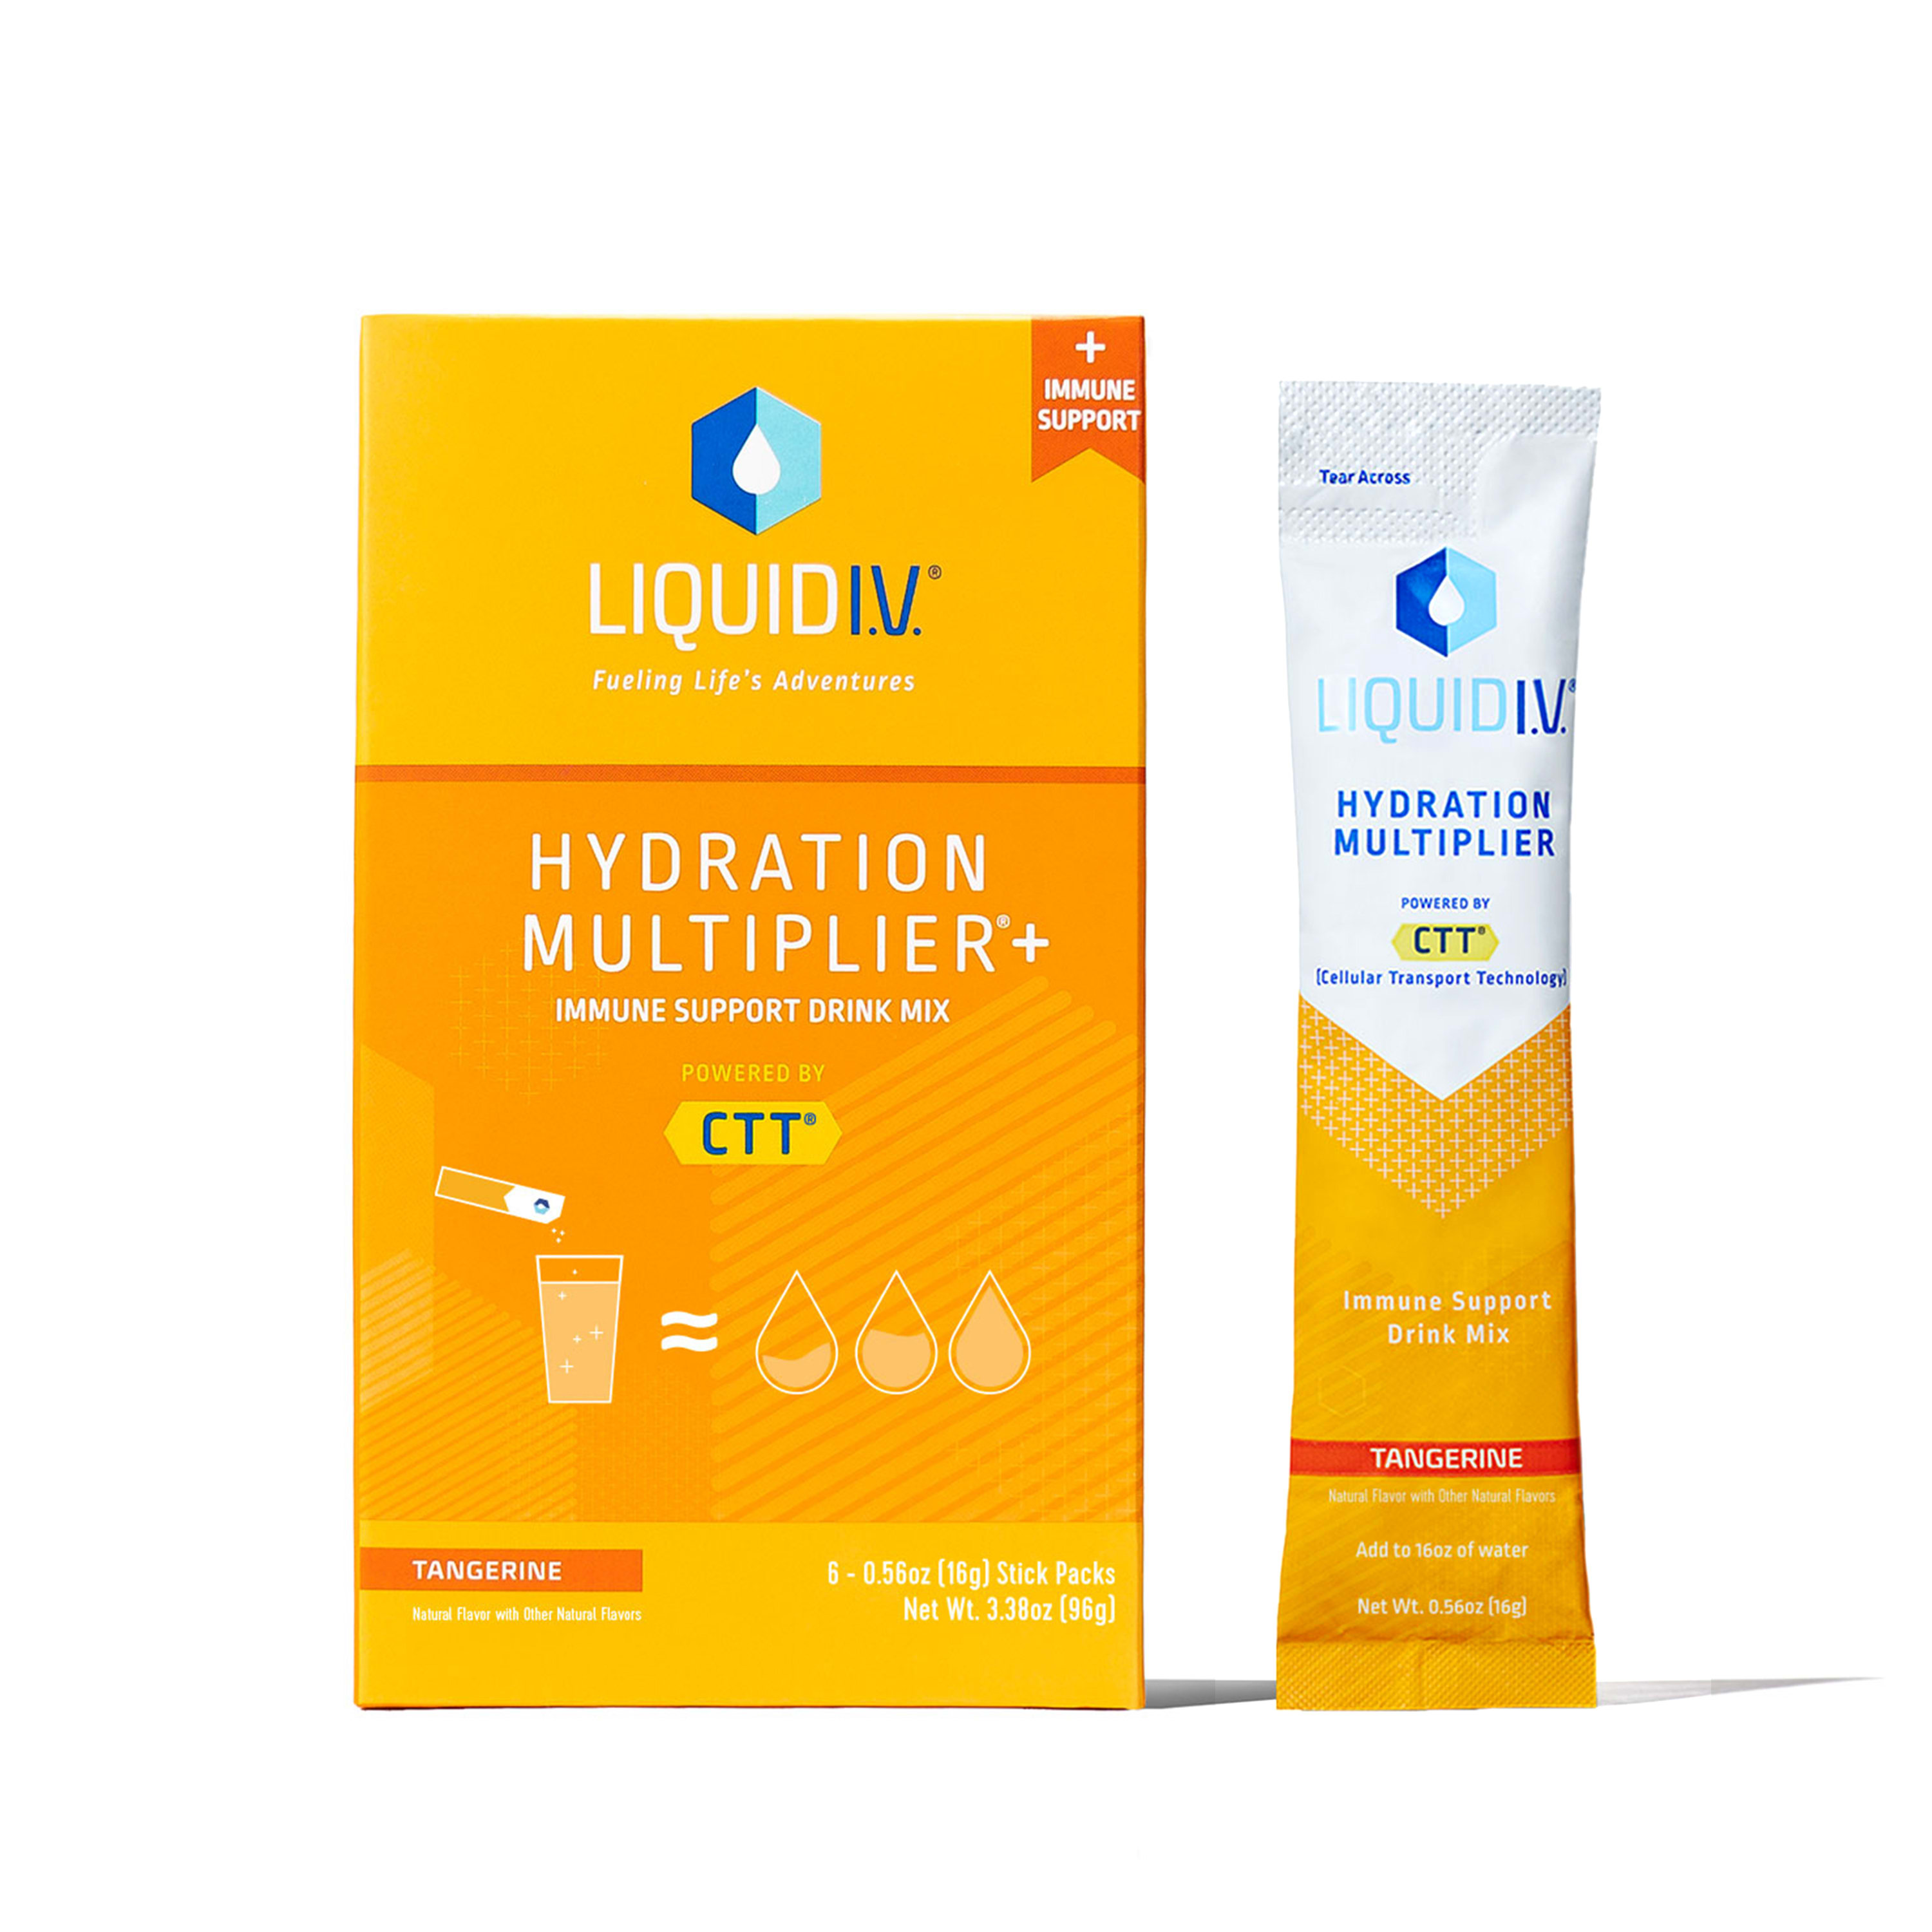 Liquid I.V. Hydration Multiplier Electrolyte Drink Mix Passion Fruit